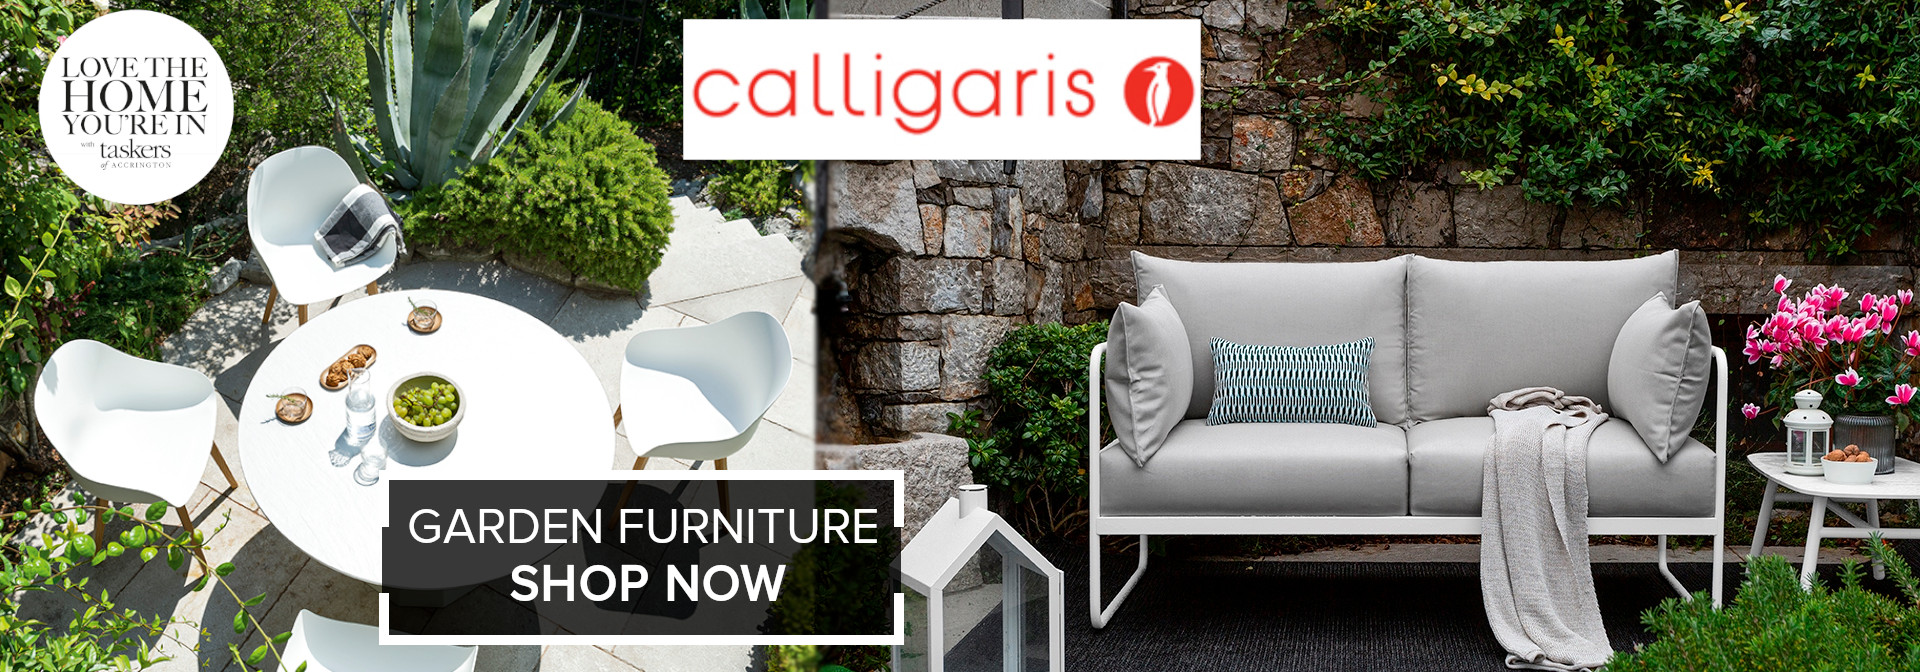 Calligaris Outdoor Furniture Shop Now